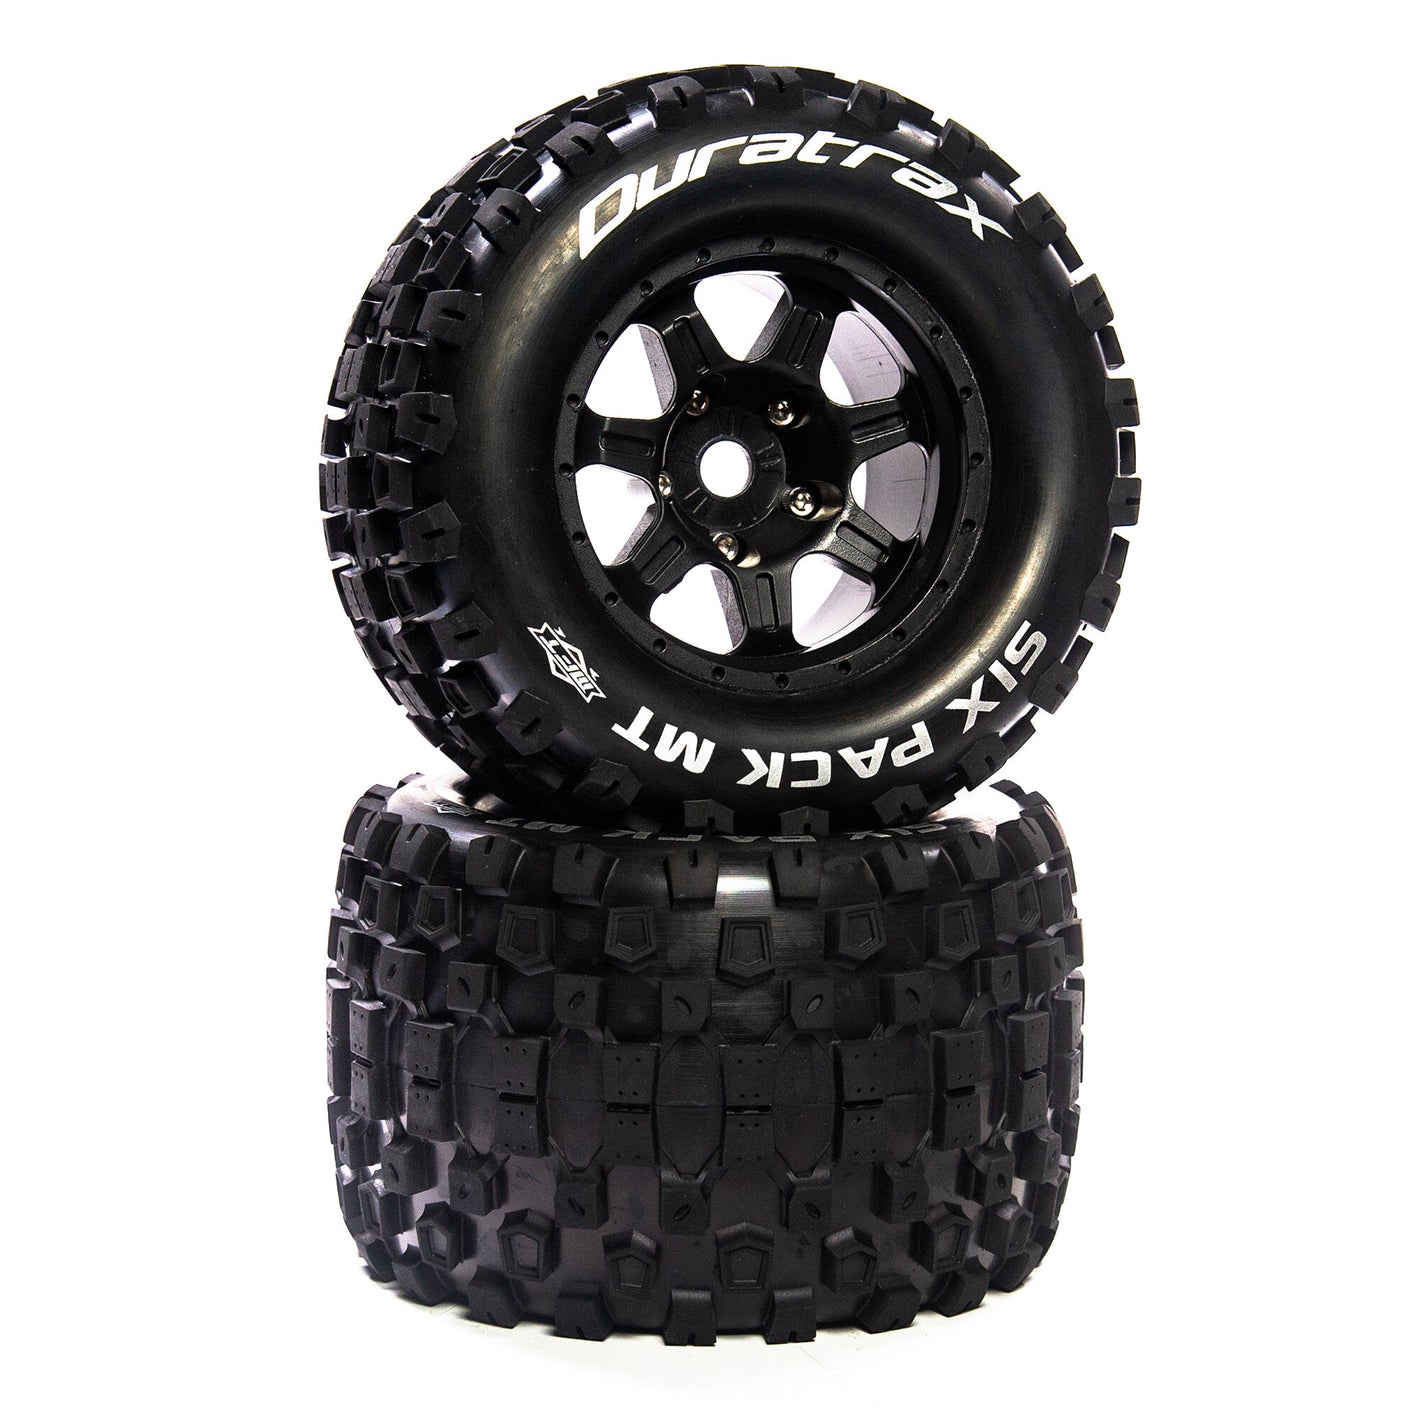 SixPack MT Belt 3.8" Mounted Front/Rear Tires .5 Offset 17mm, Black (2)